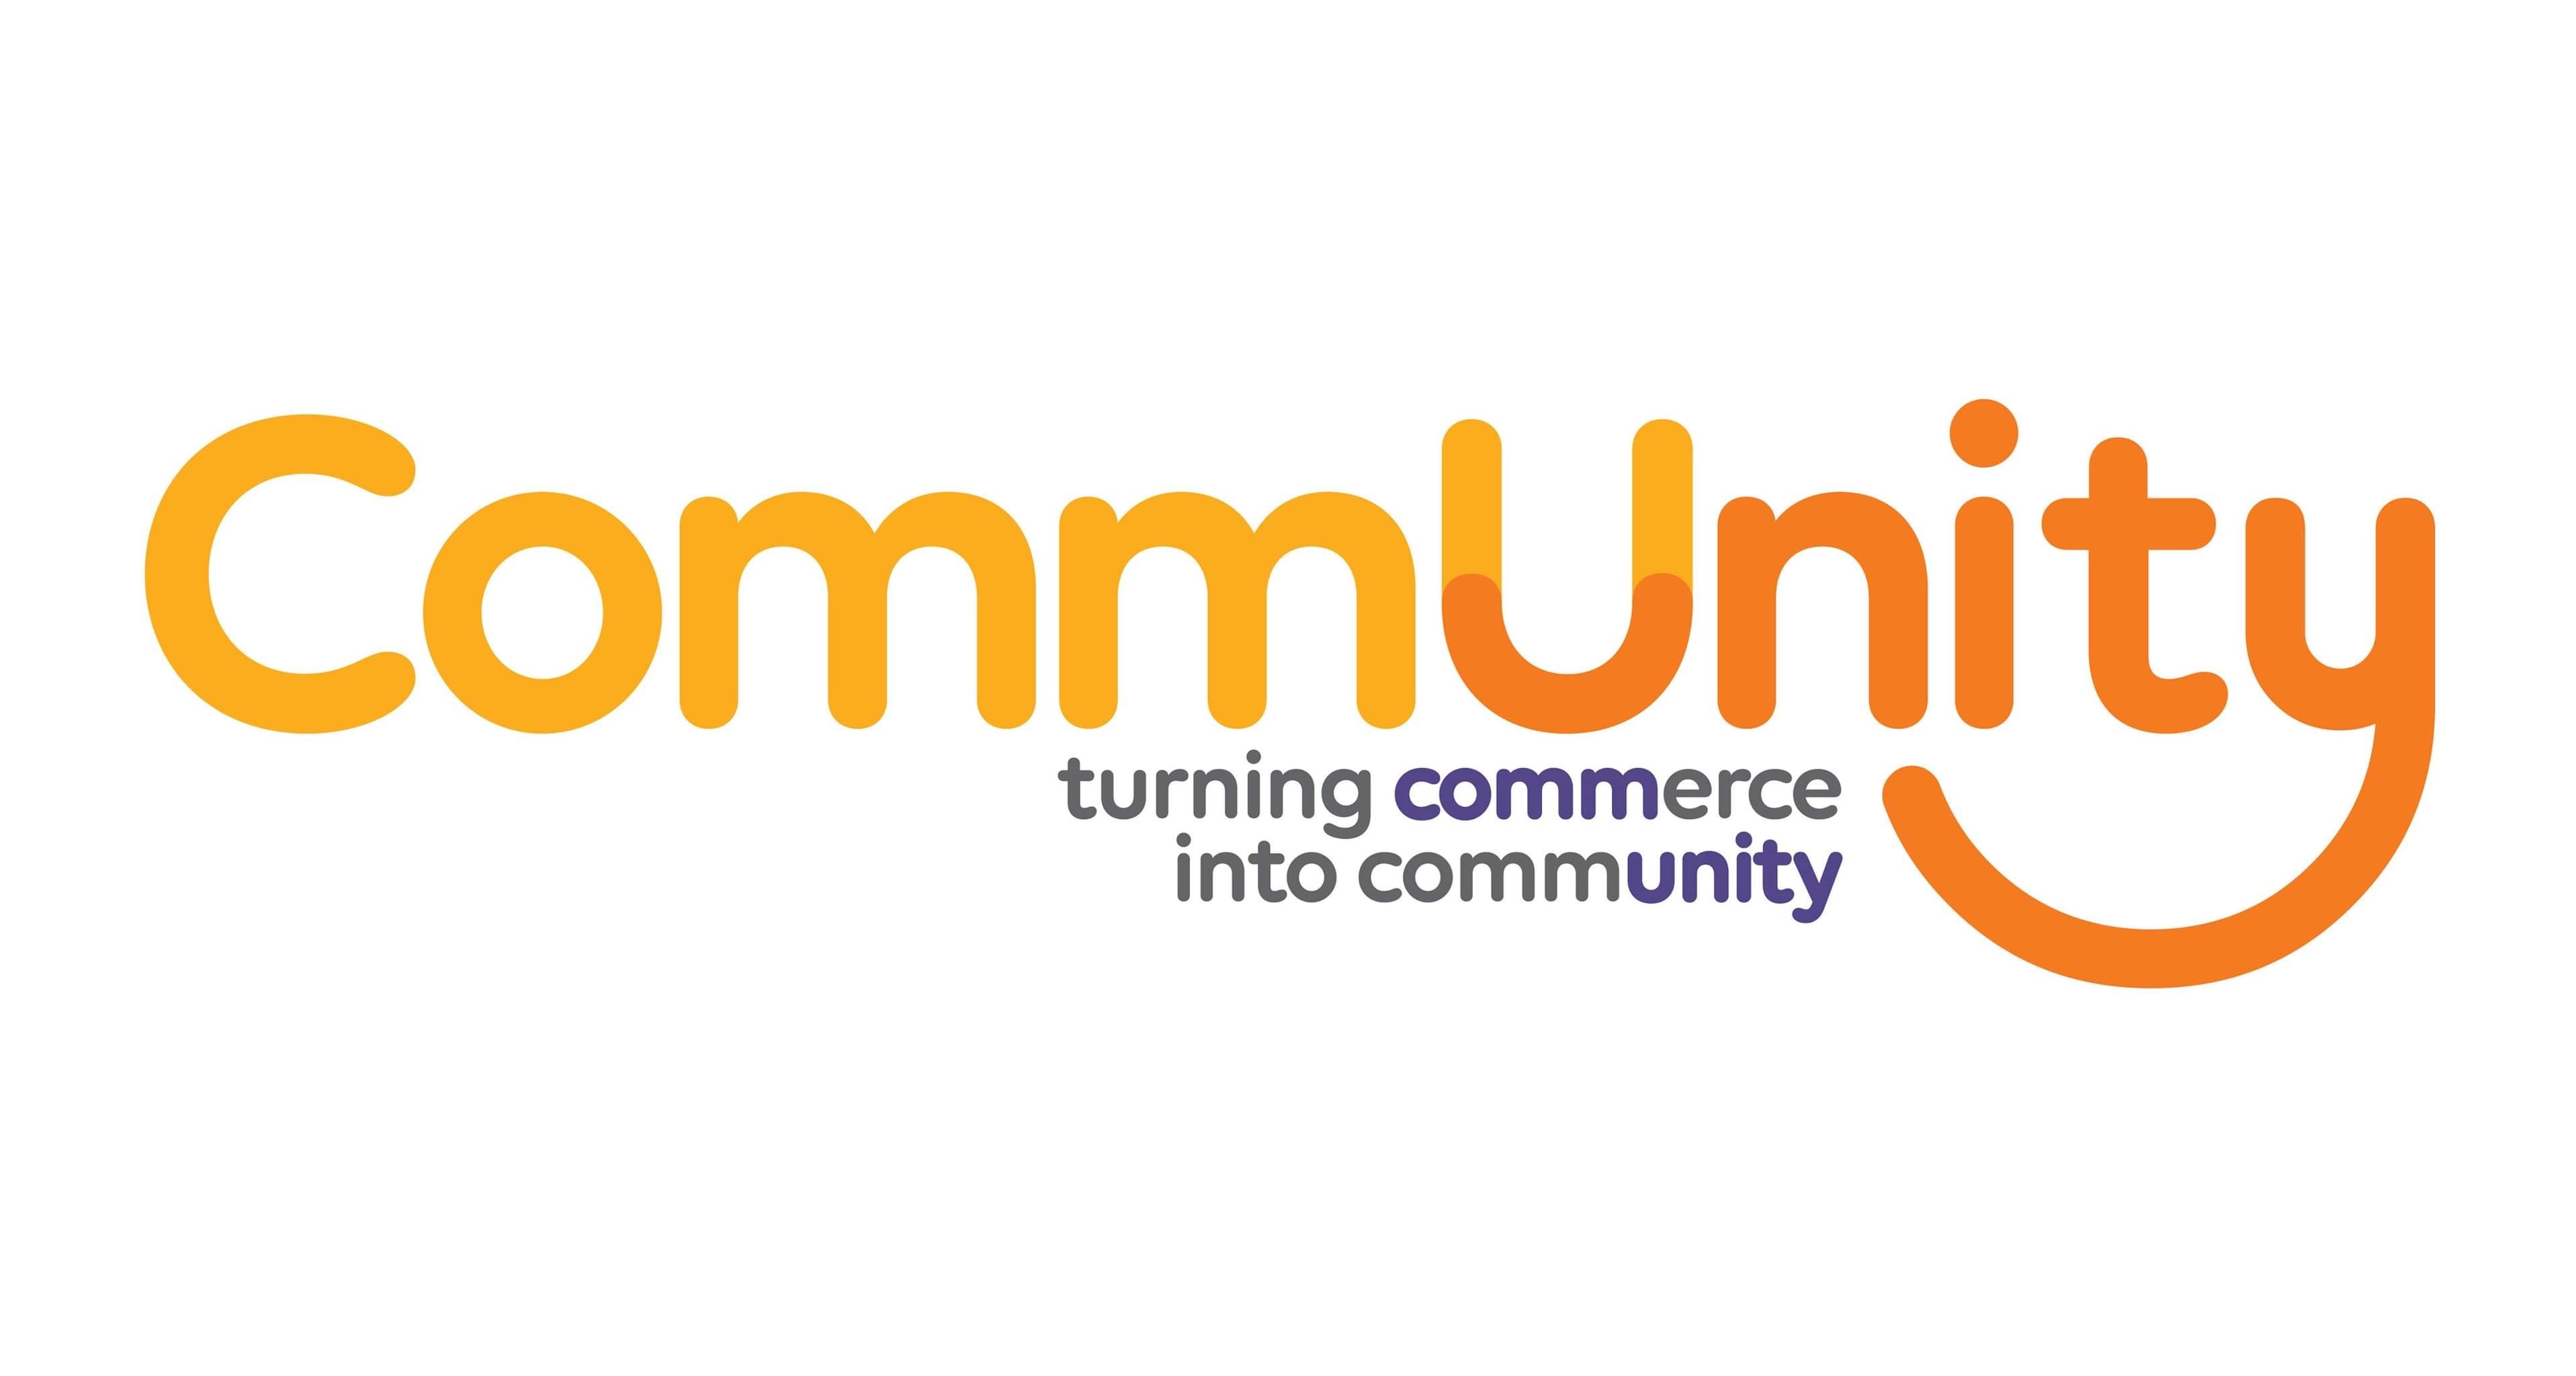 CommUnity Ambassador - creating positive change in your community!